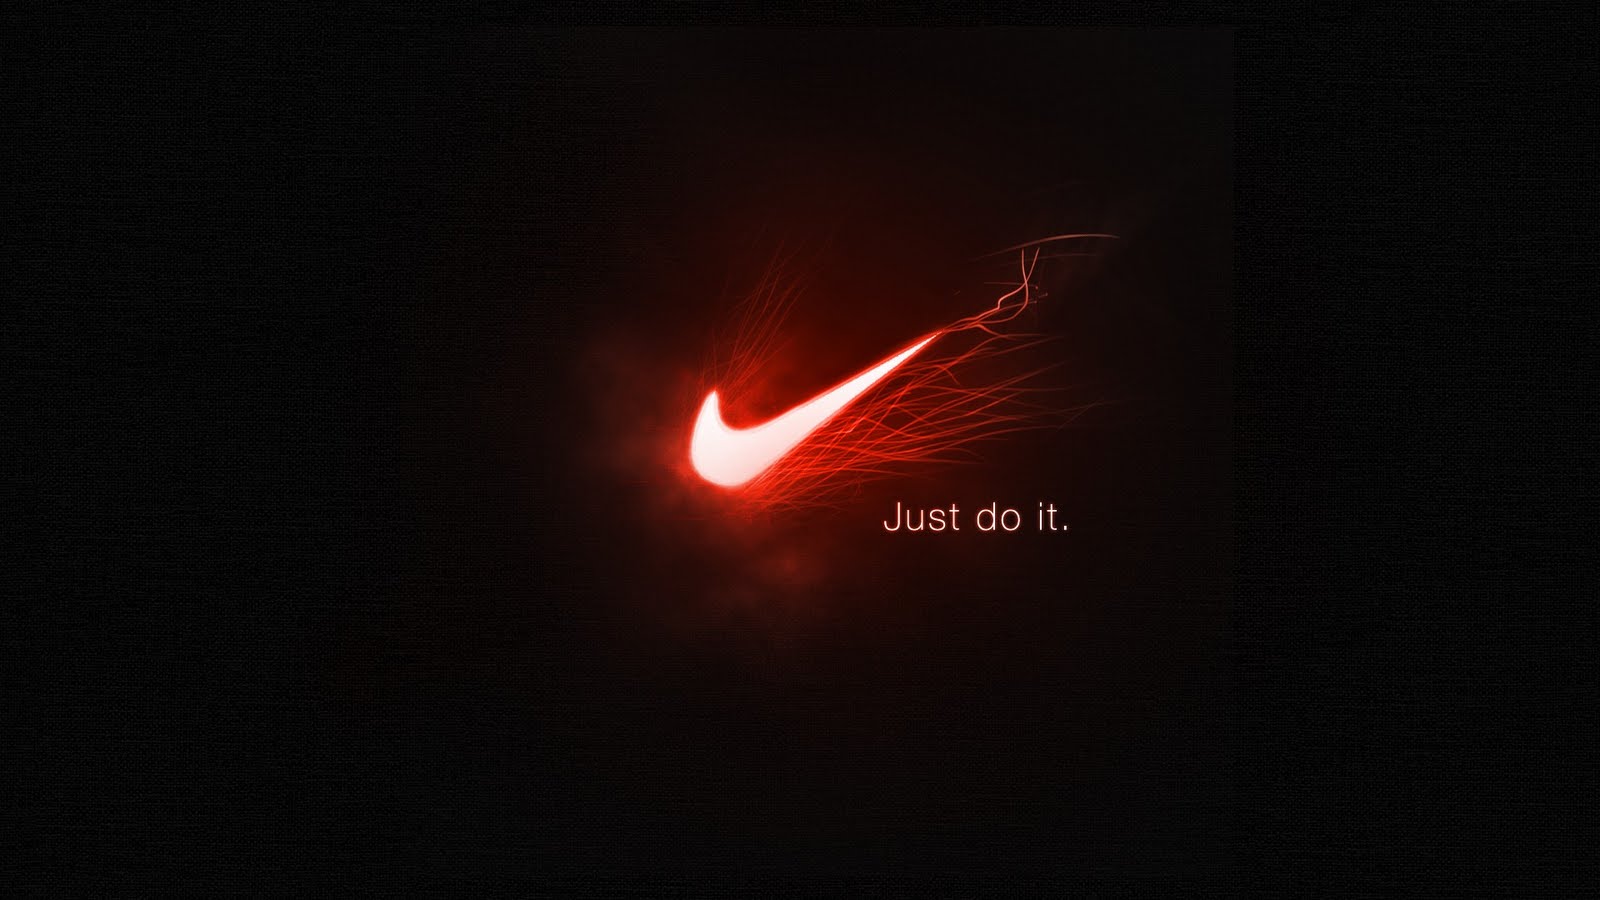 77+] Nike For Laptop - WallpaperSafari